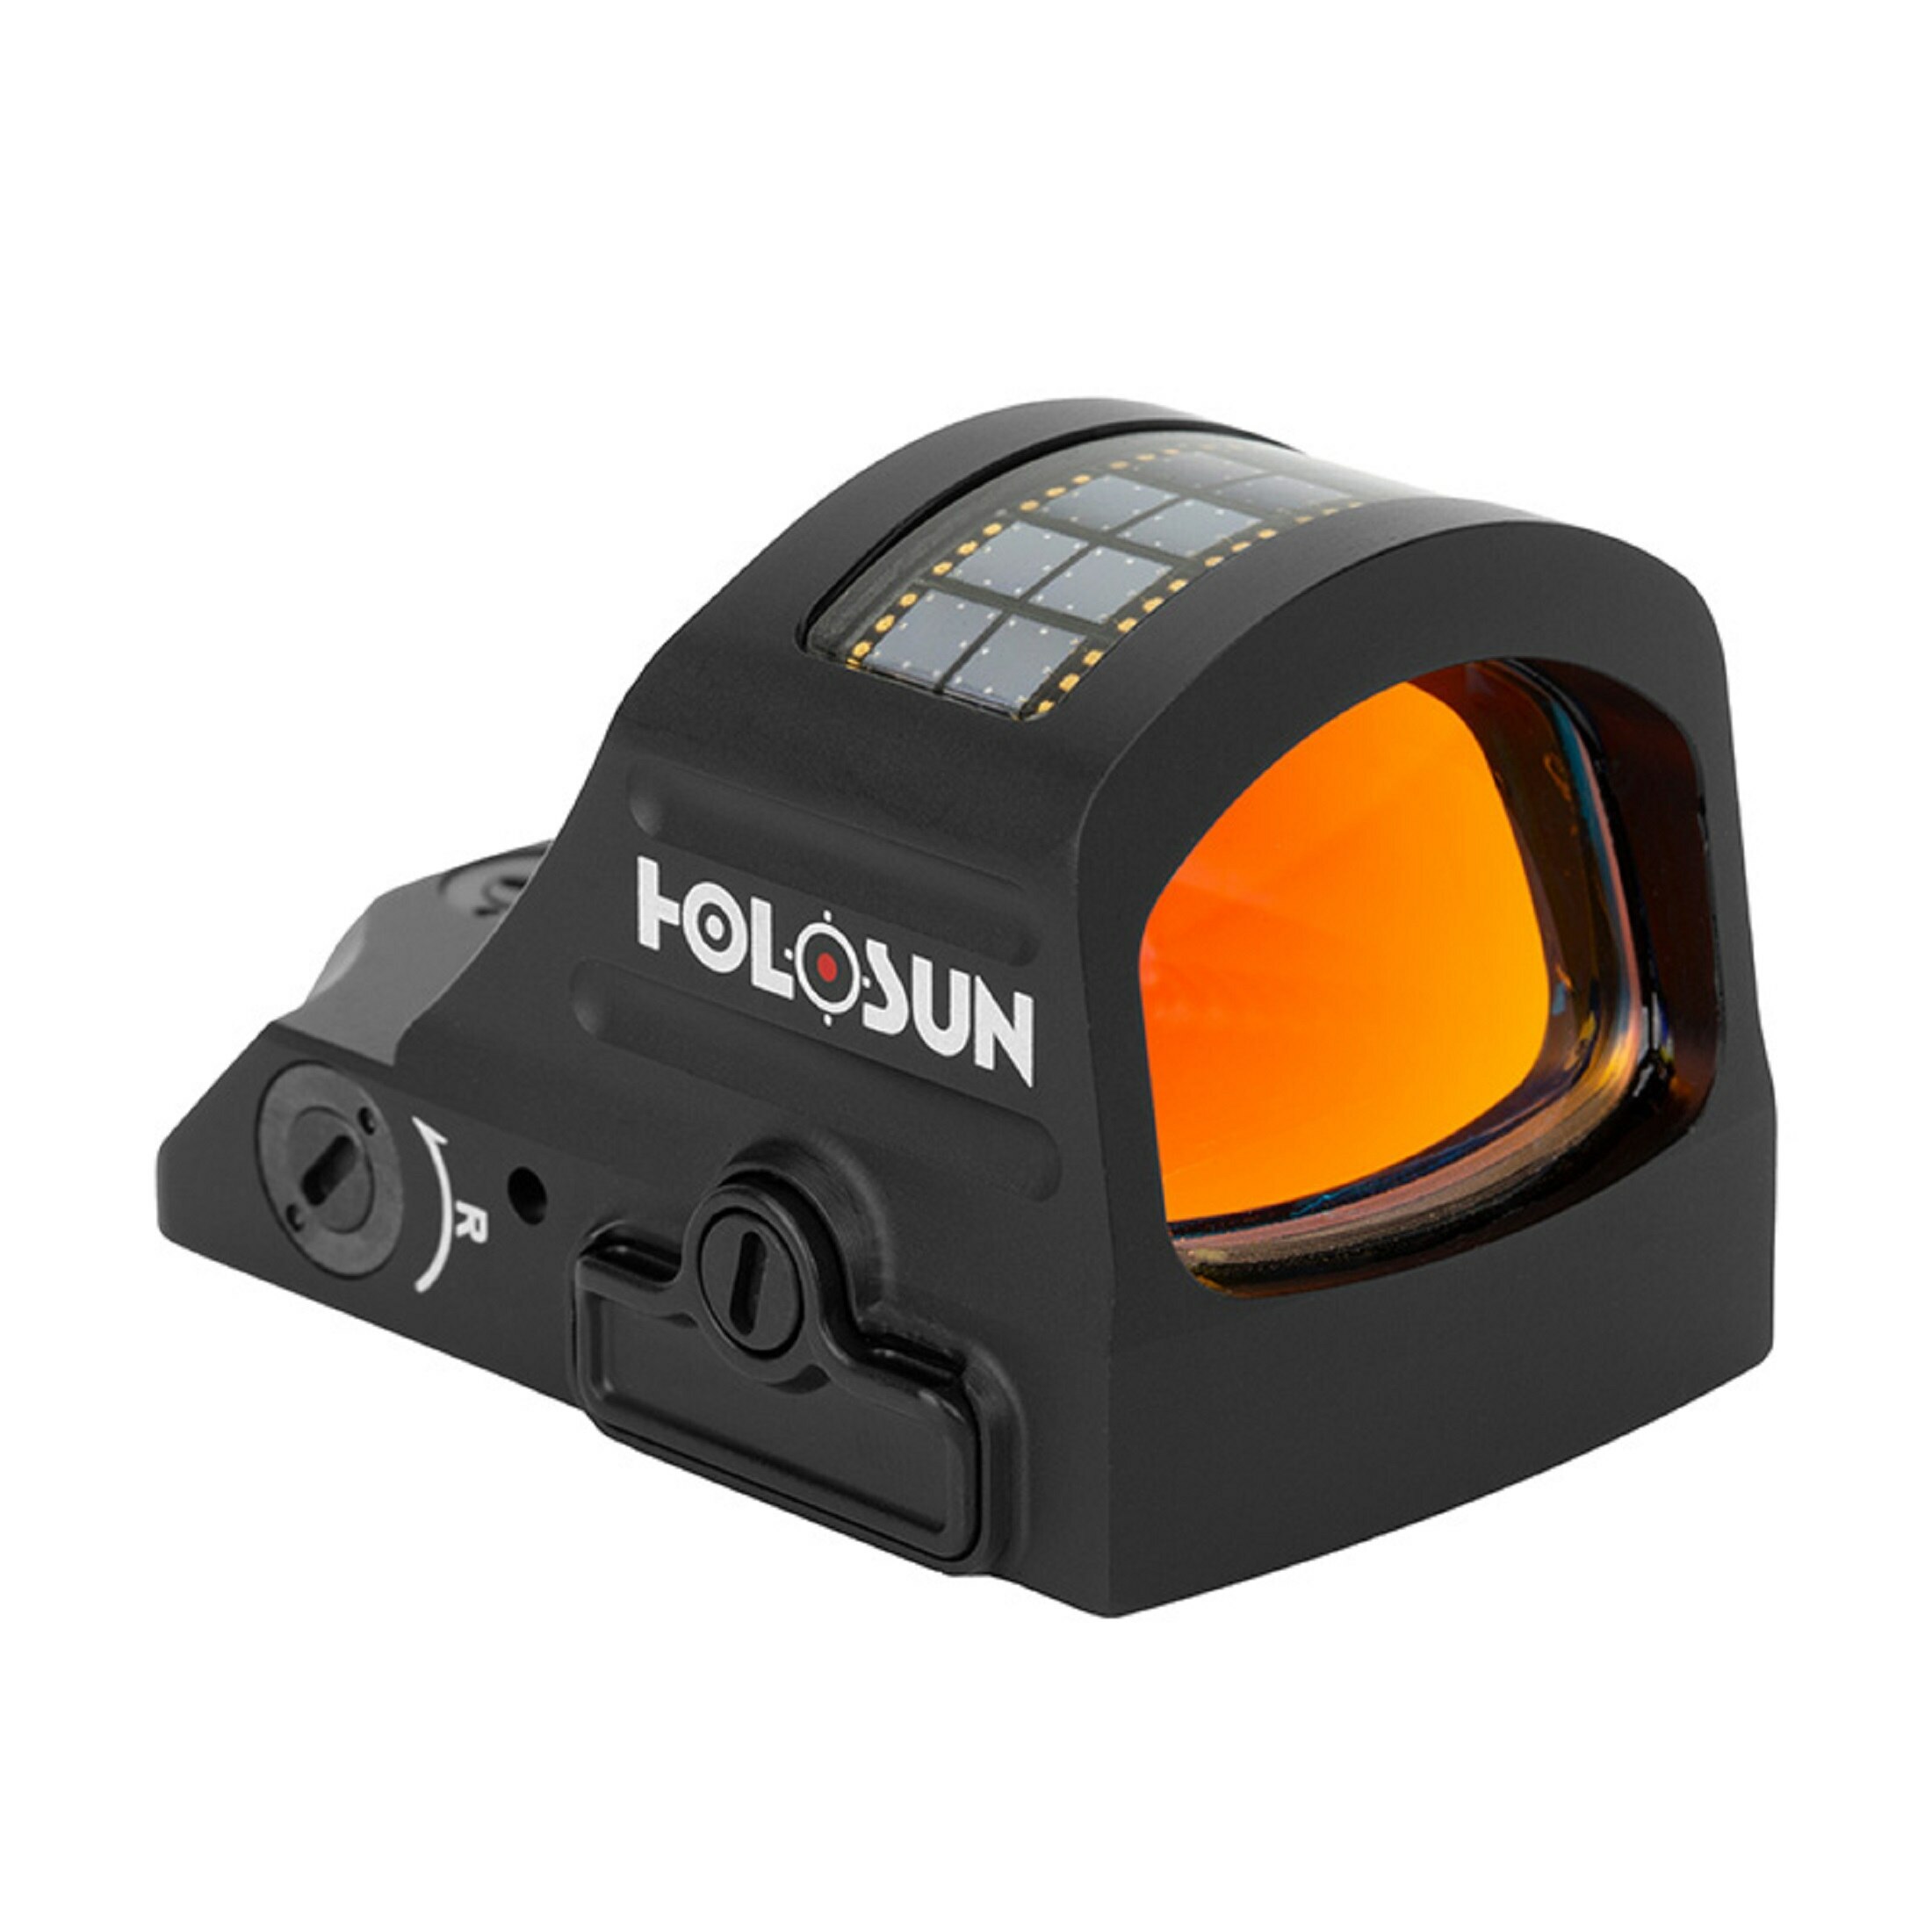 Holosun HS507C-X2 open reflex red dot sight switchable 2MOA dot, 32MOA circle dot reticle solar cel…